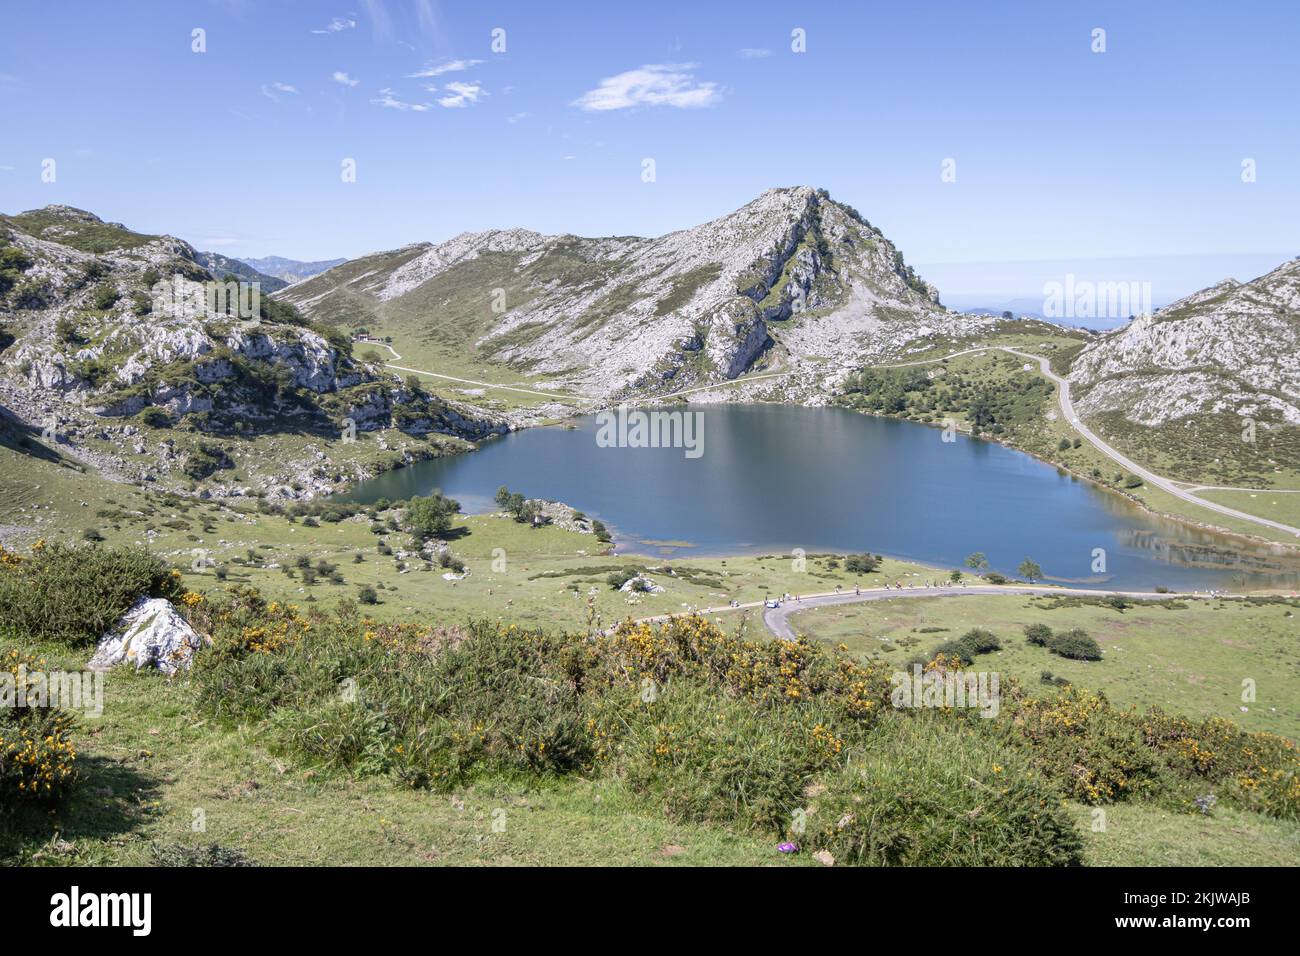 Lago énol vu de la Picota, lacs de Covadonga, parc national de Picos de Europa, Asturies, Espagne Banque D'Images